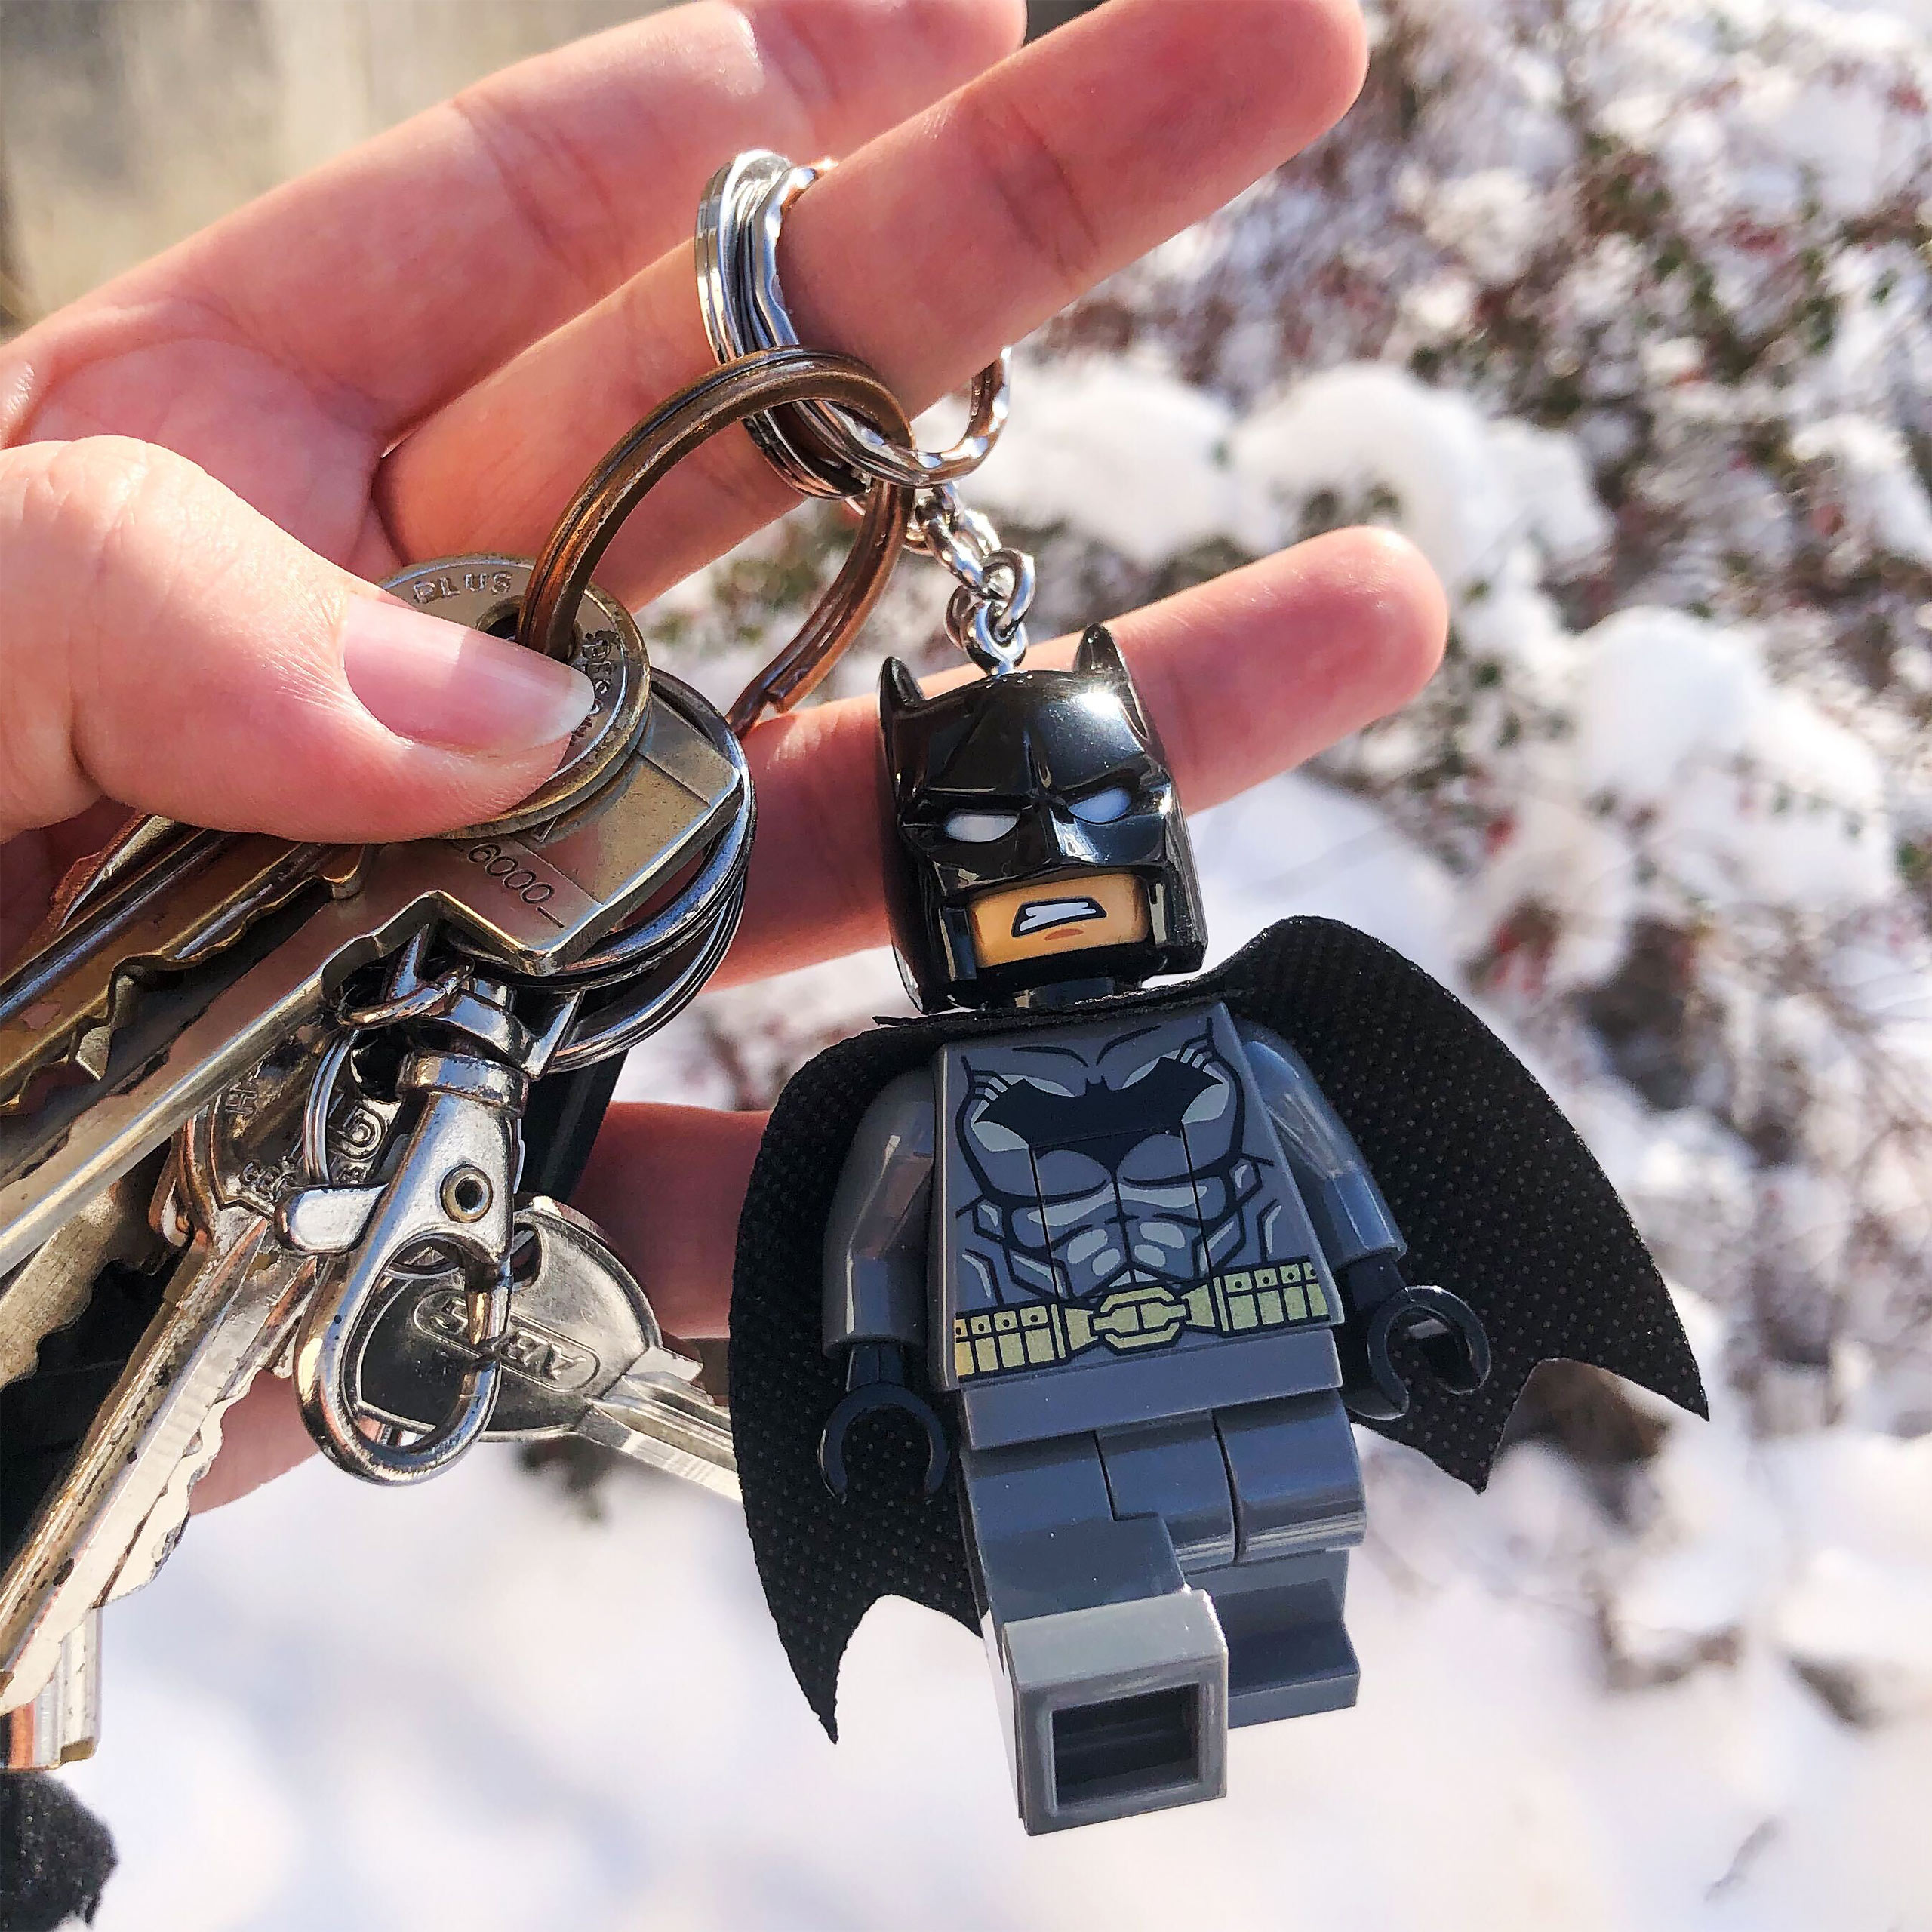 Batman - Super Heroes LEGO Keychain with Light